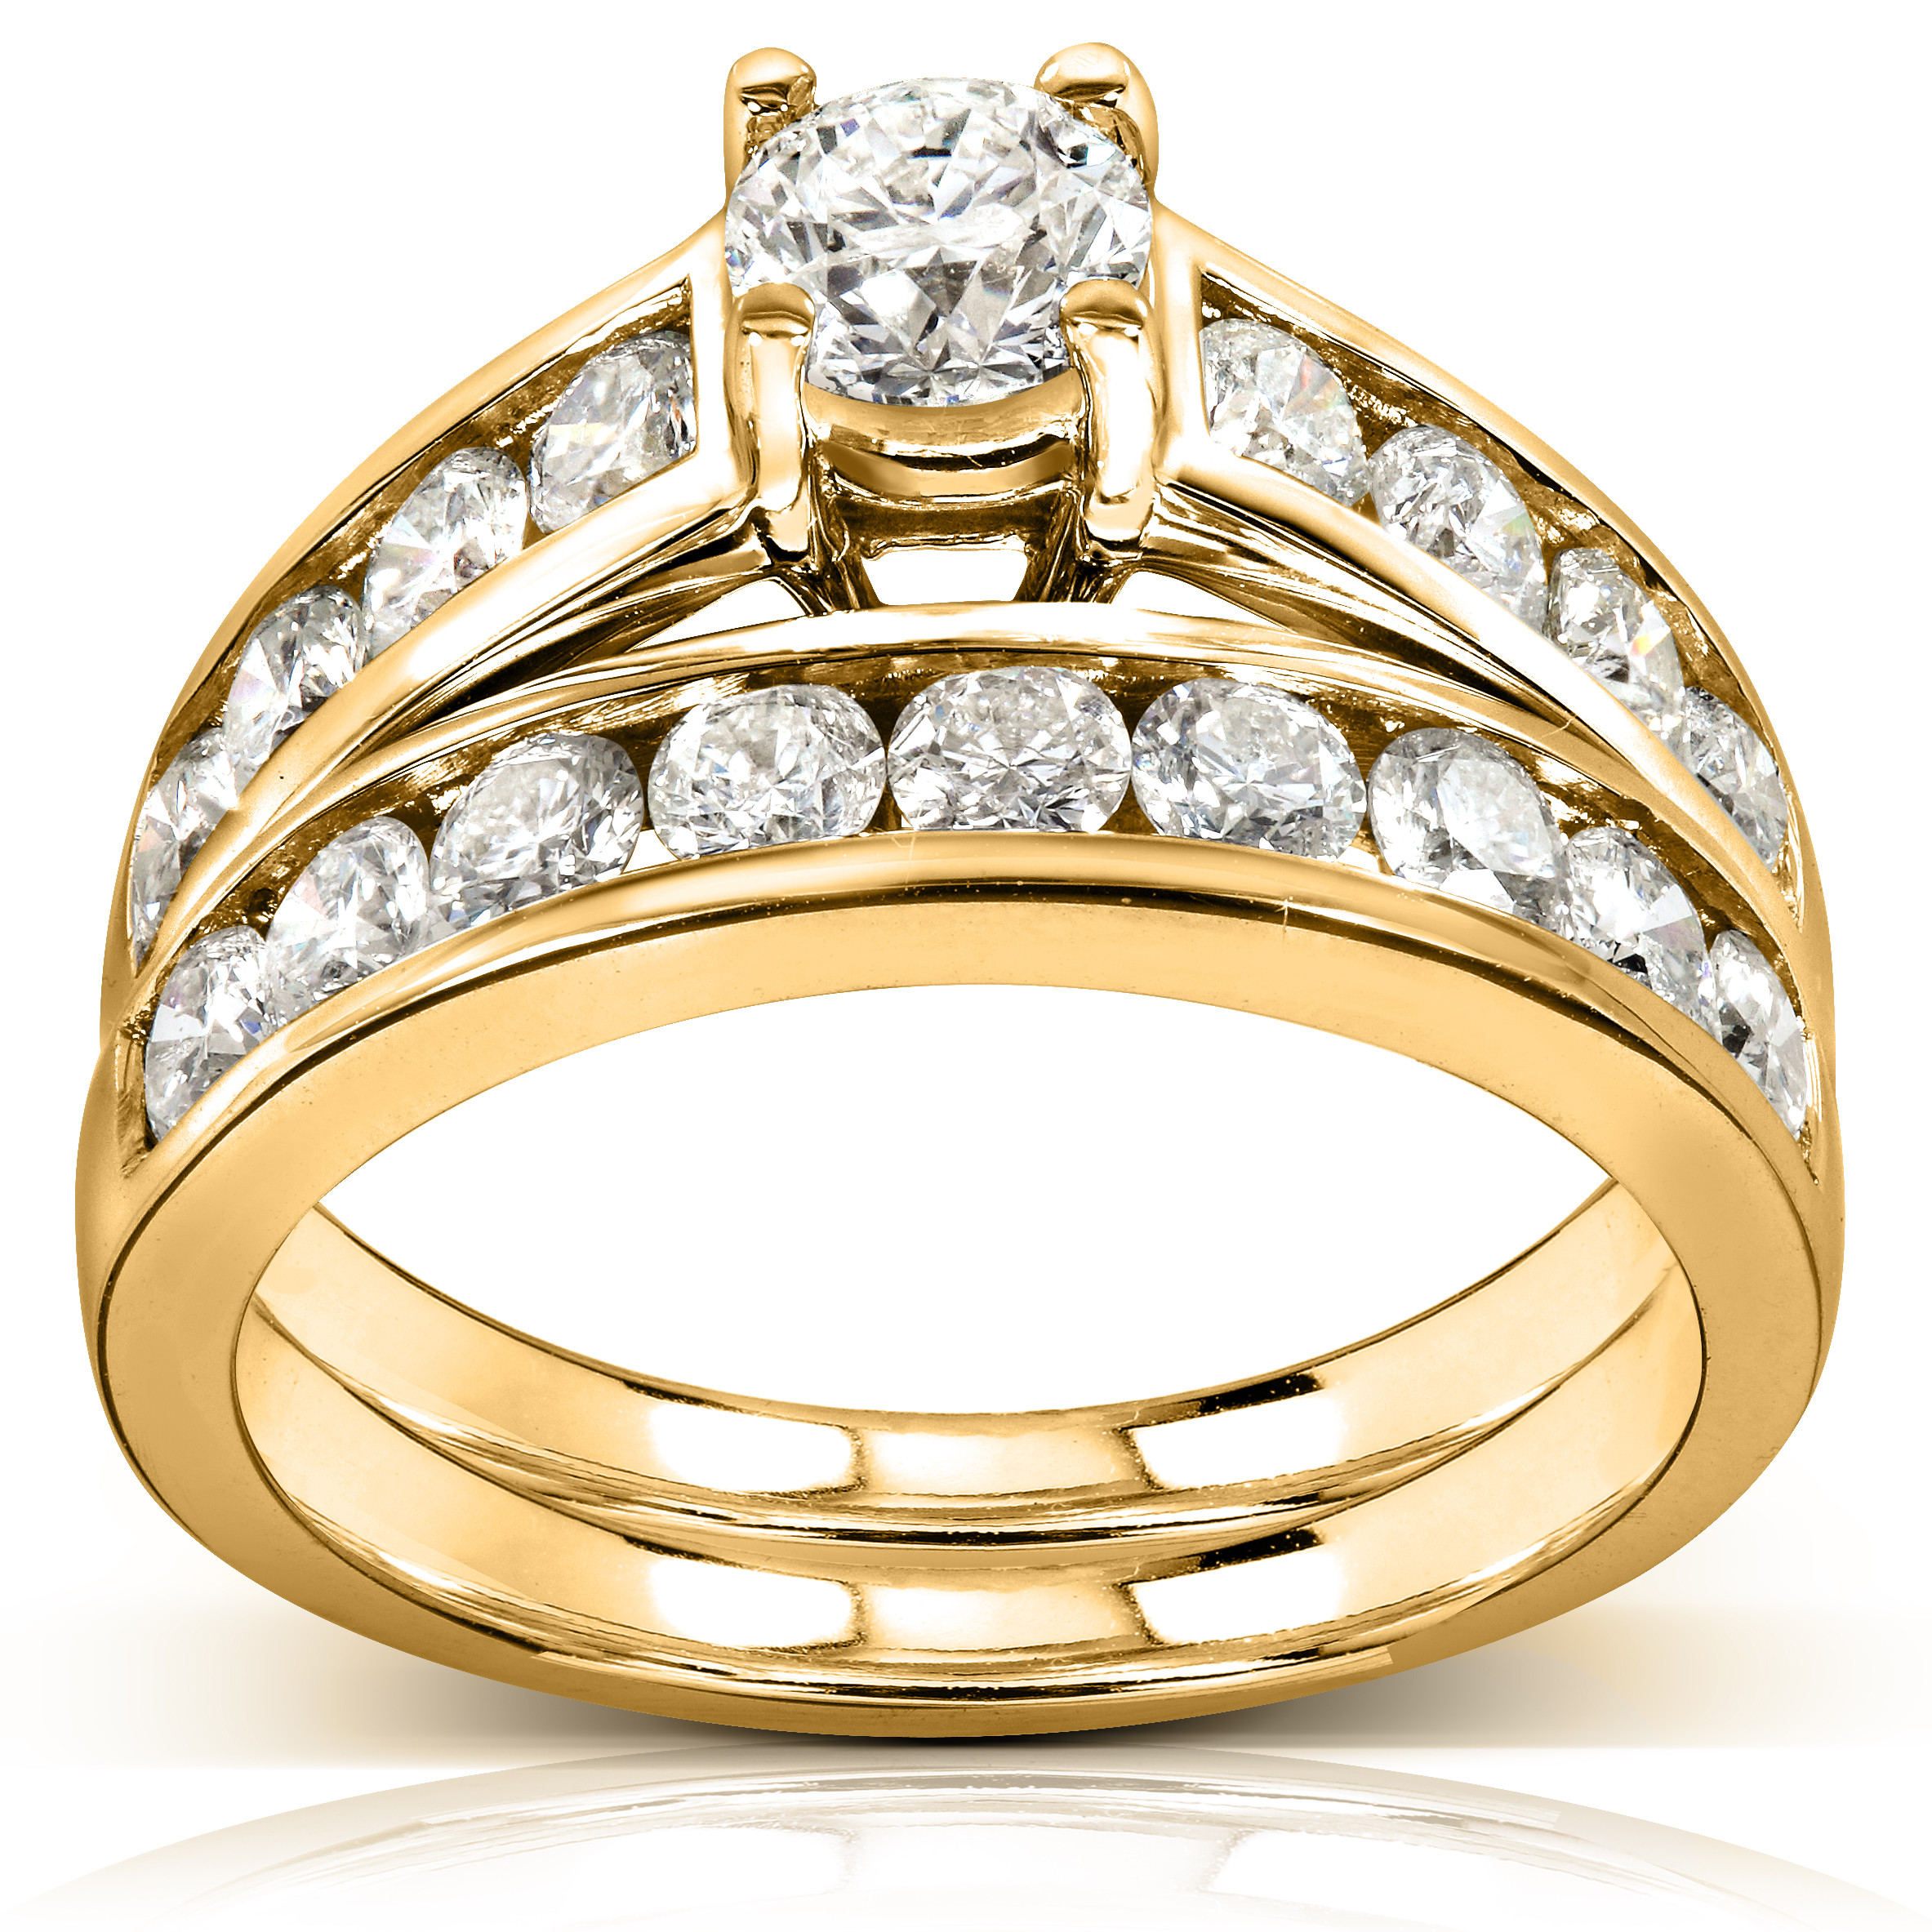 Wedding Rings Under 200
 Luxury Bridal Ring Sets Under 200 Wedding Sets Under 200